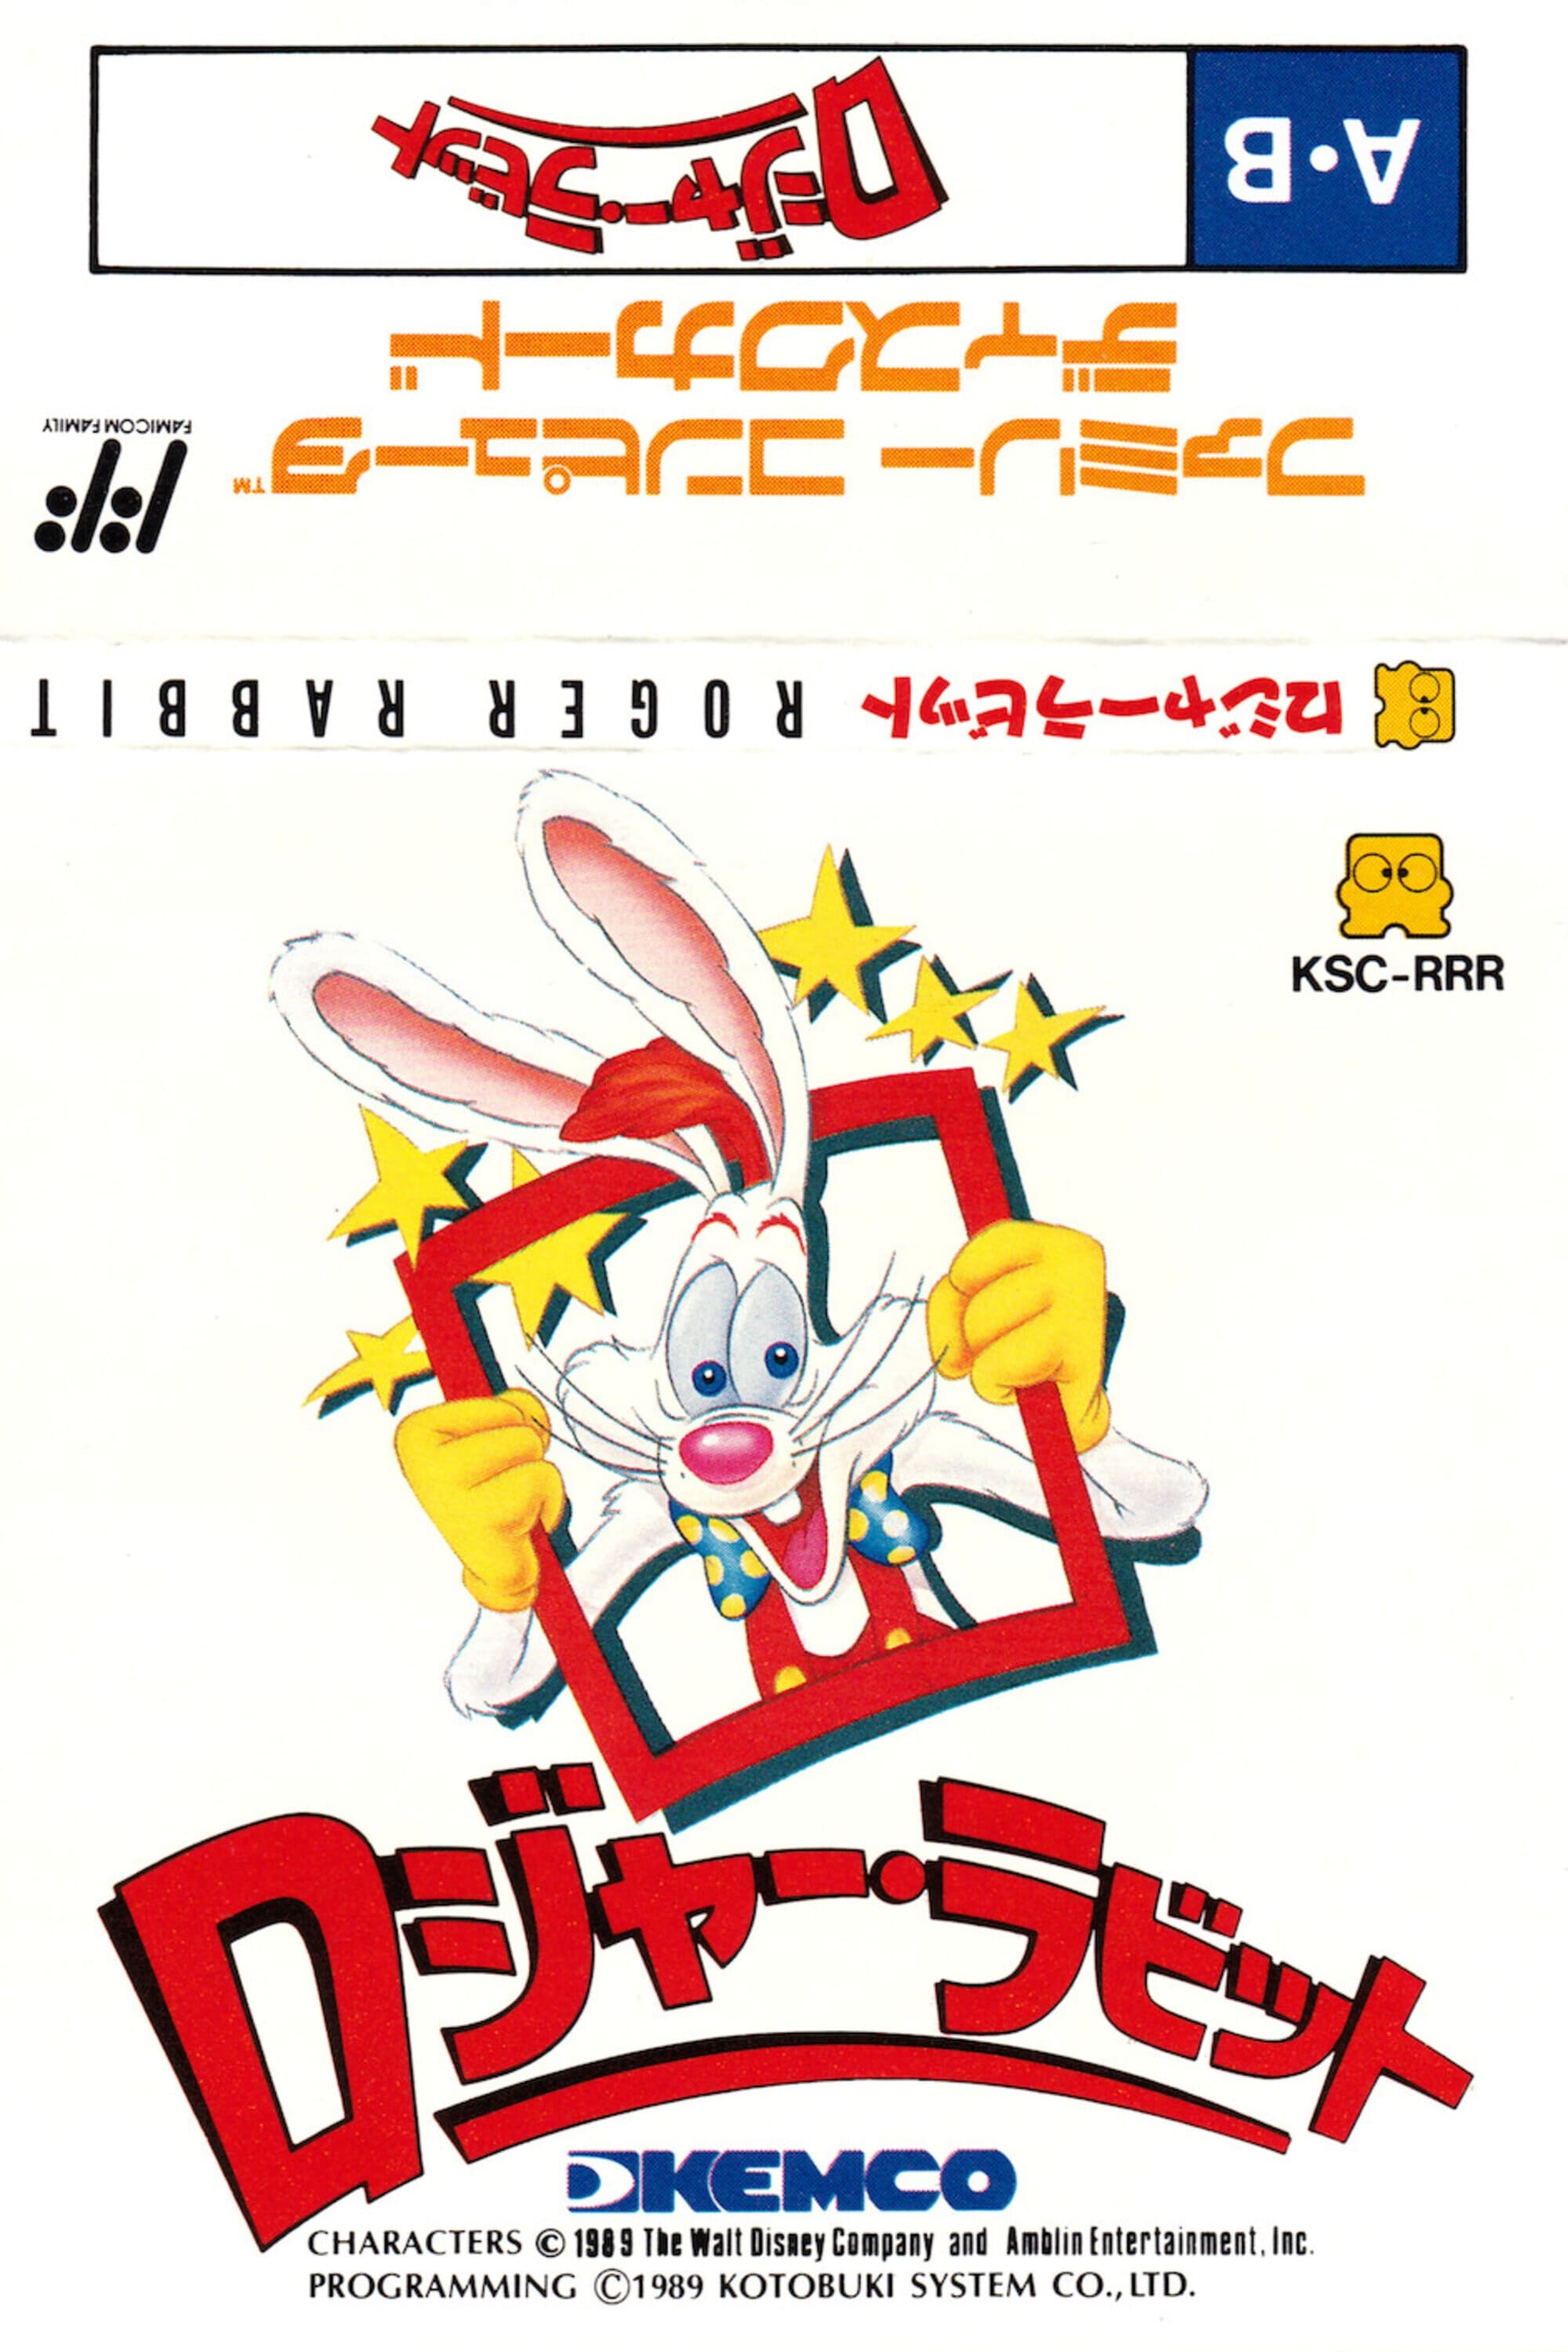 Mike Matei Brown Bricks stream! Roger Rabbit for Famicom Disk System!